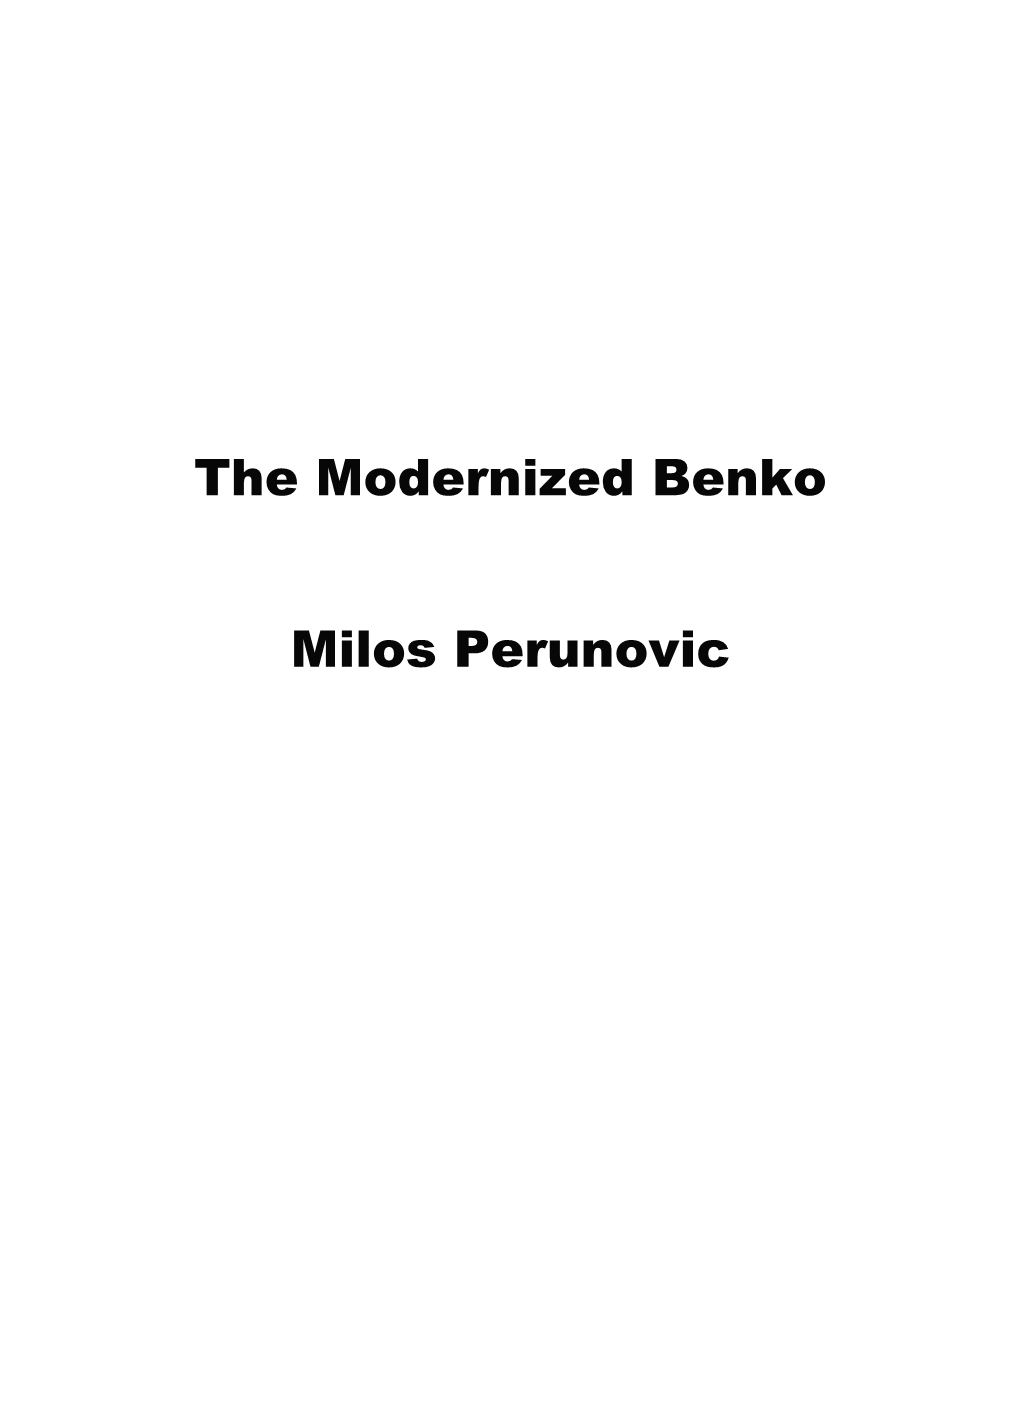 The Modernized Benko Gambit